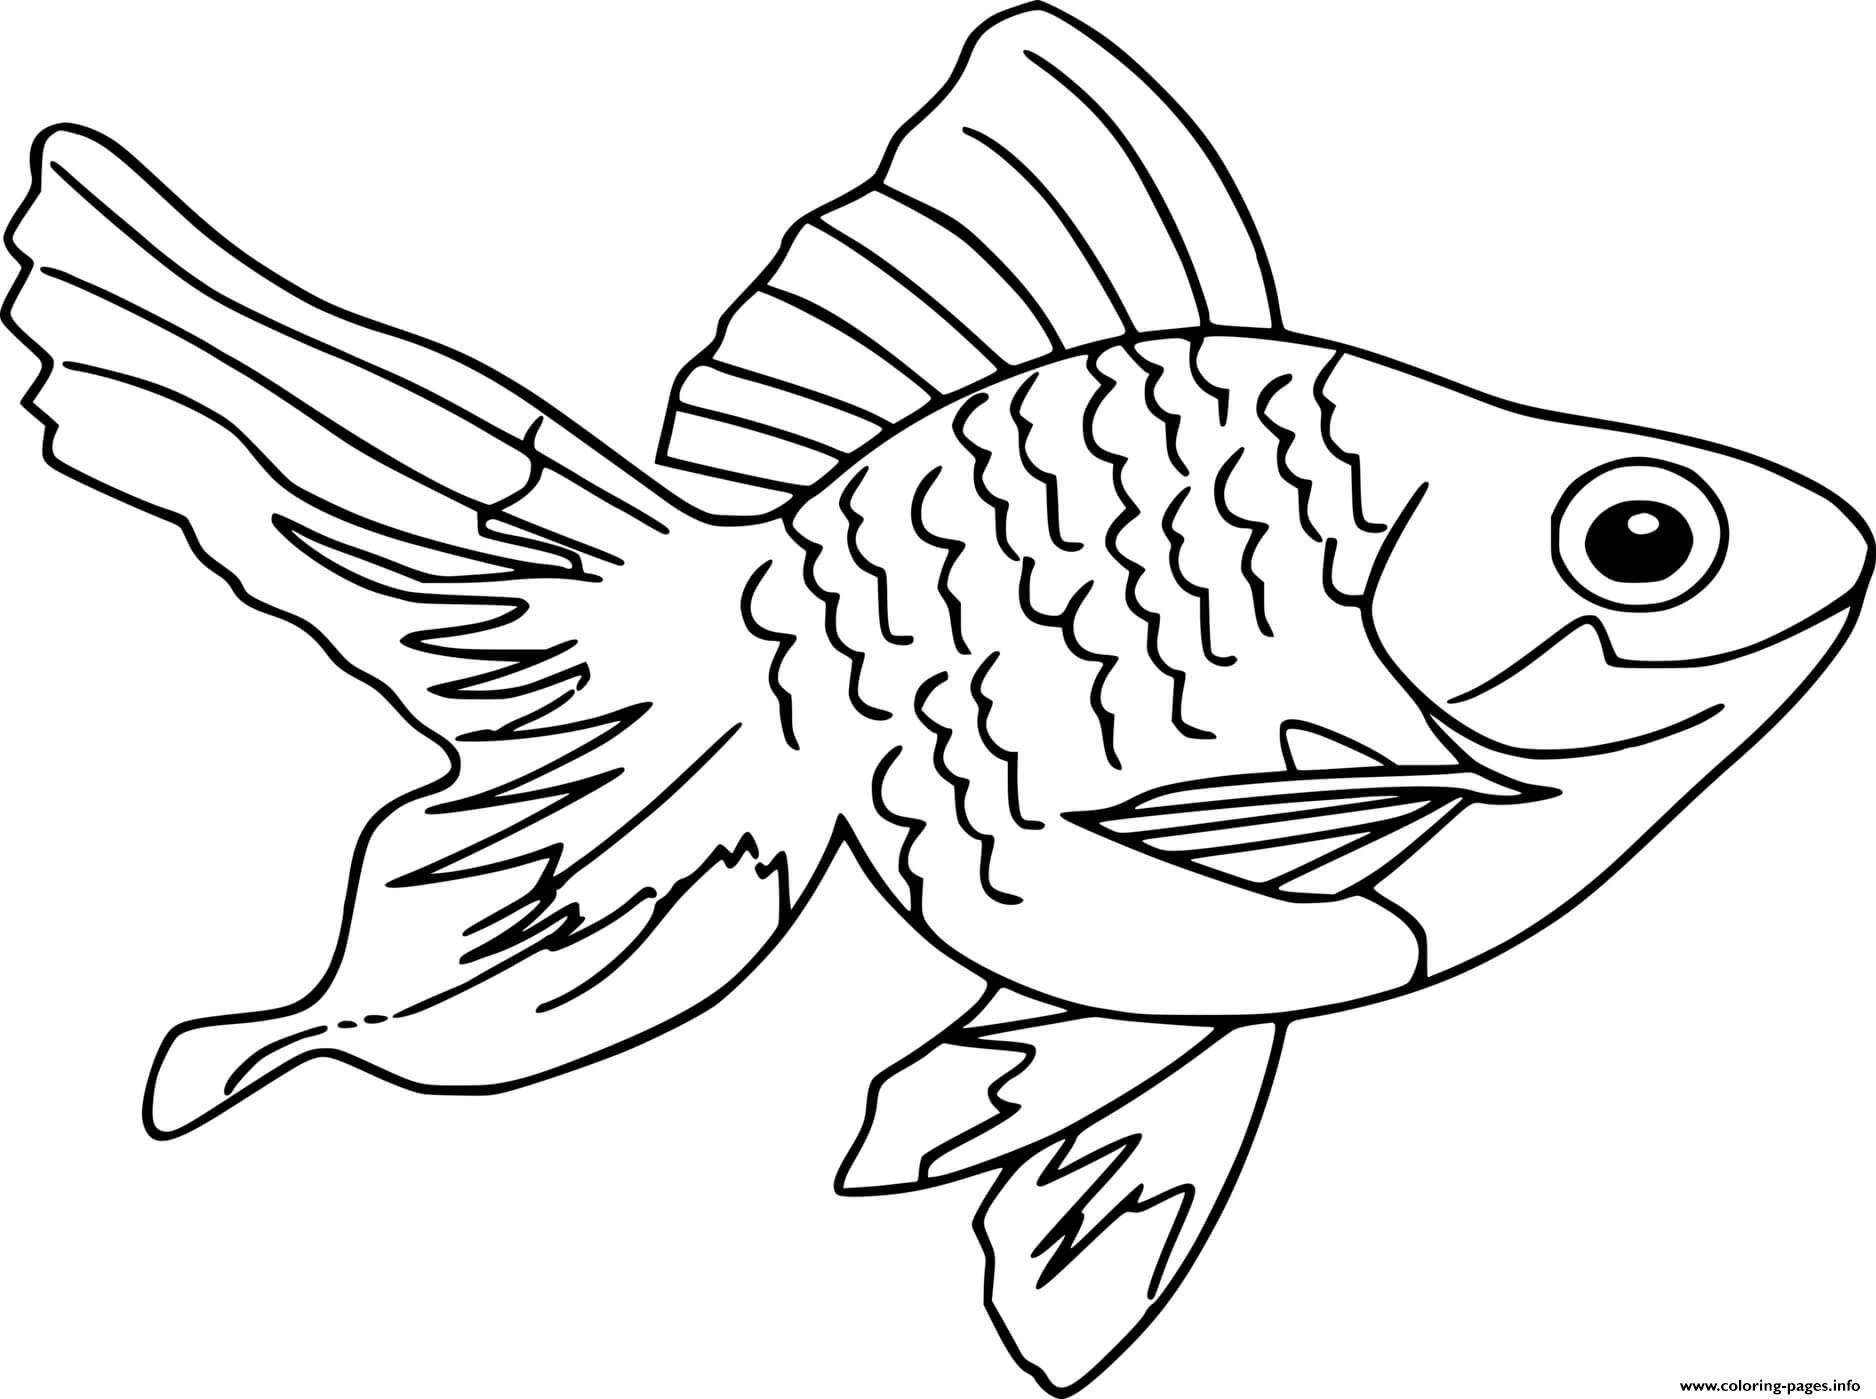 Fantail Goldfish coloring